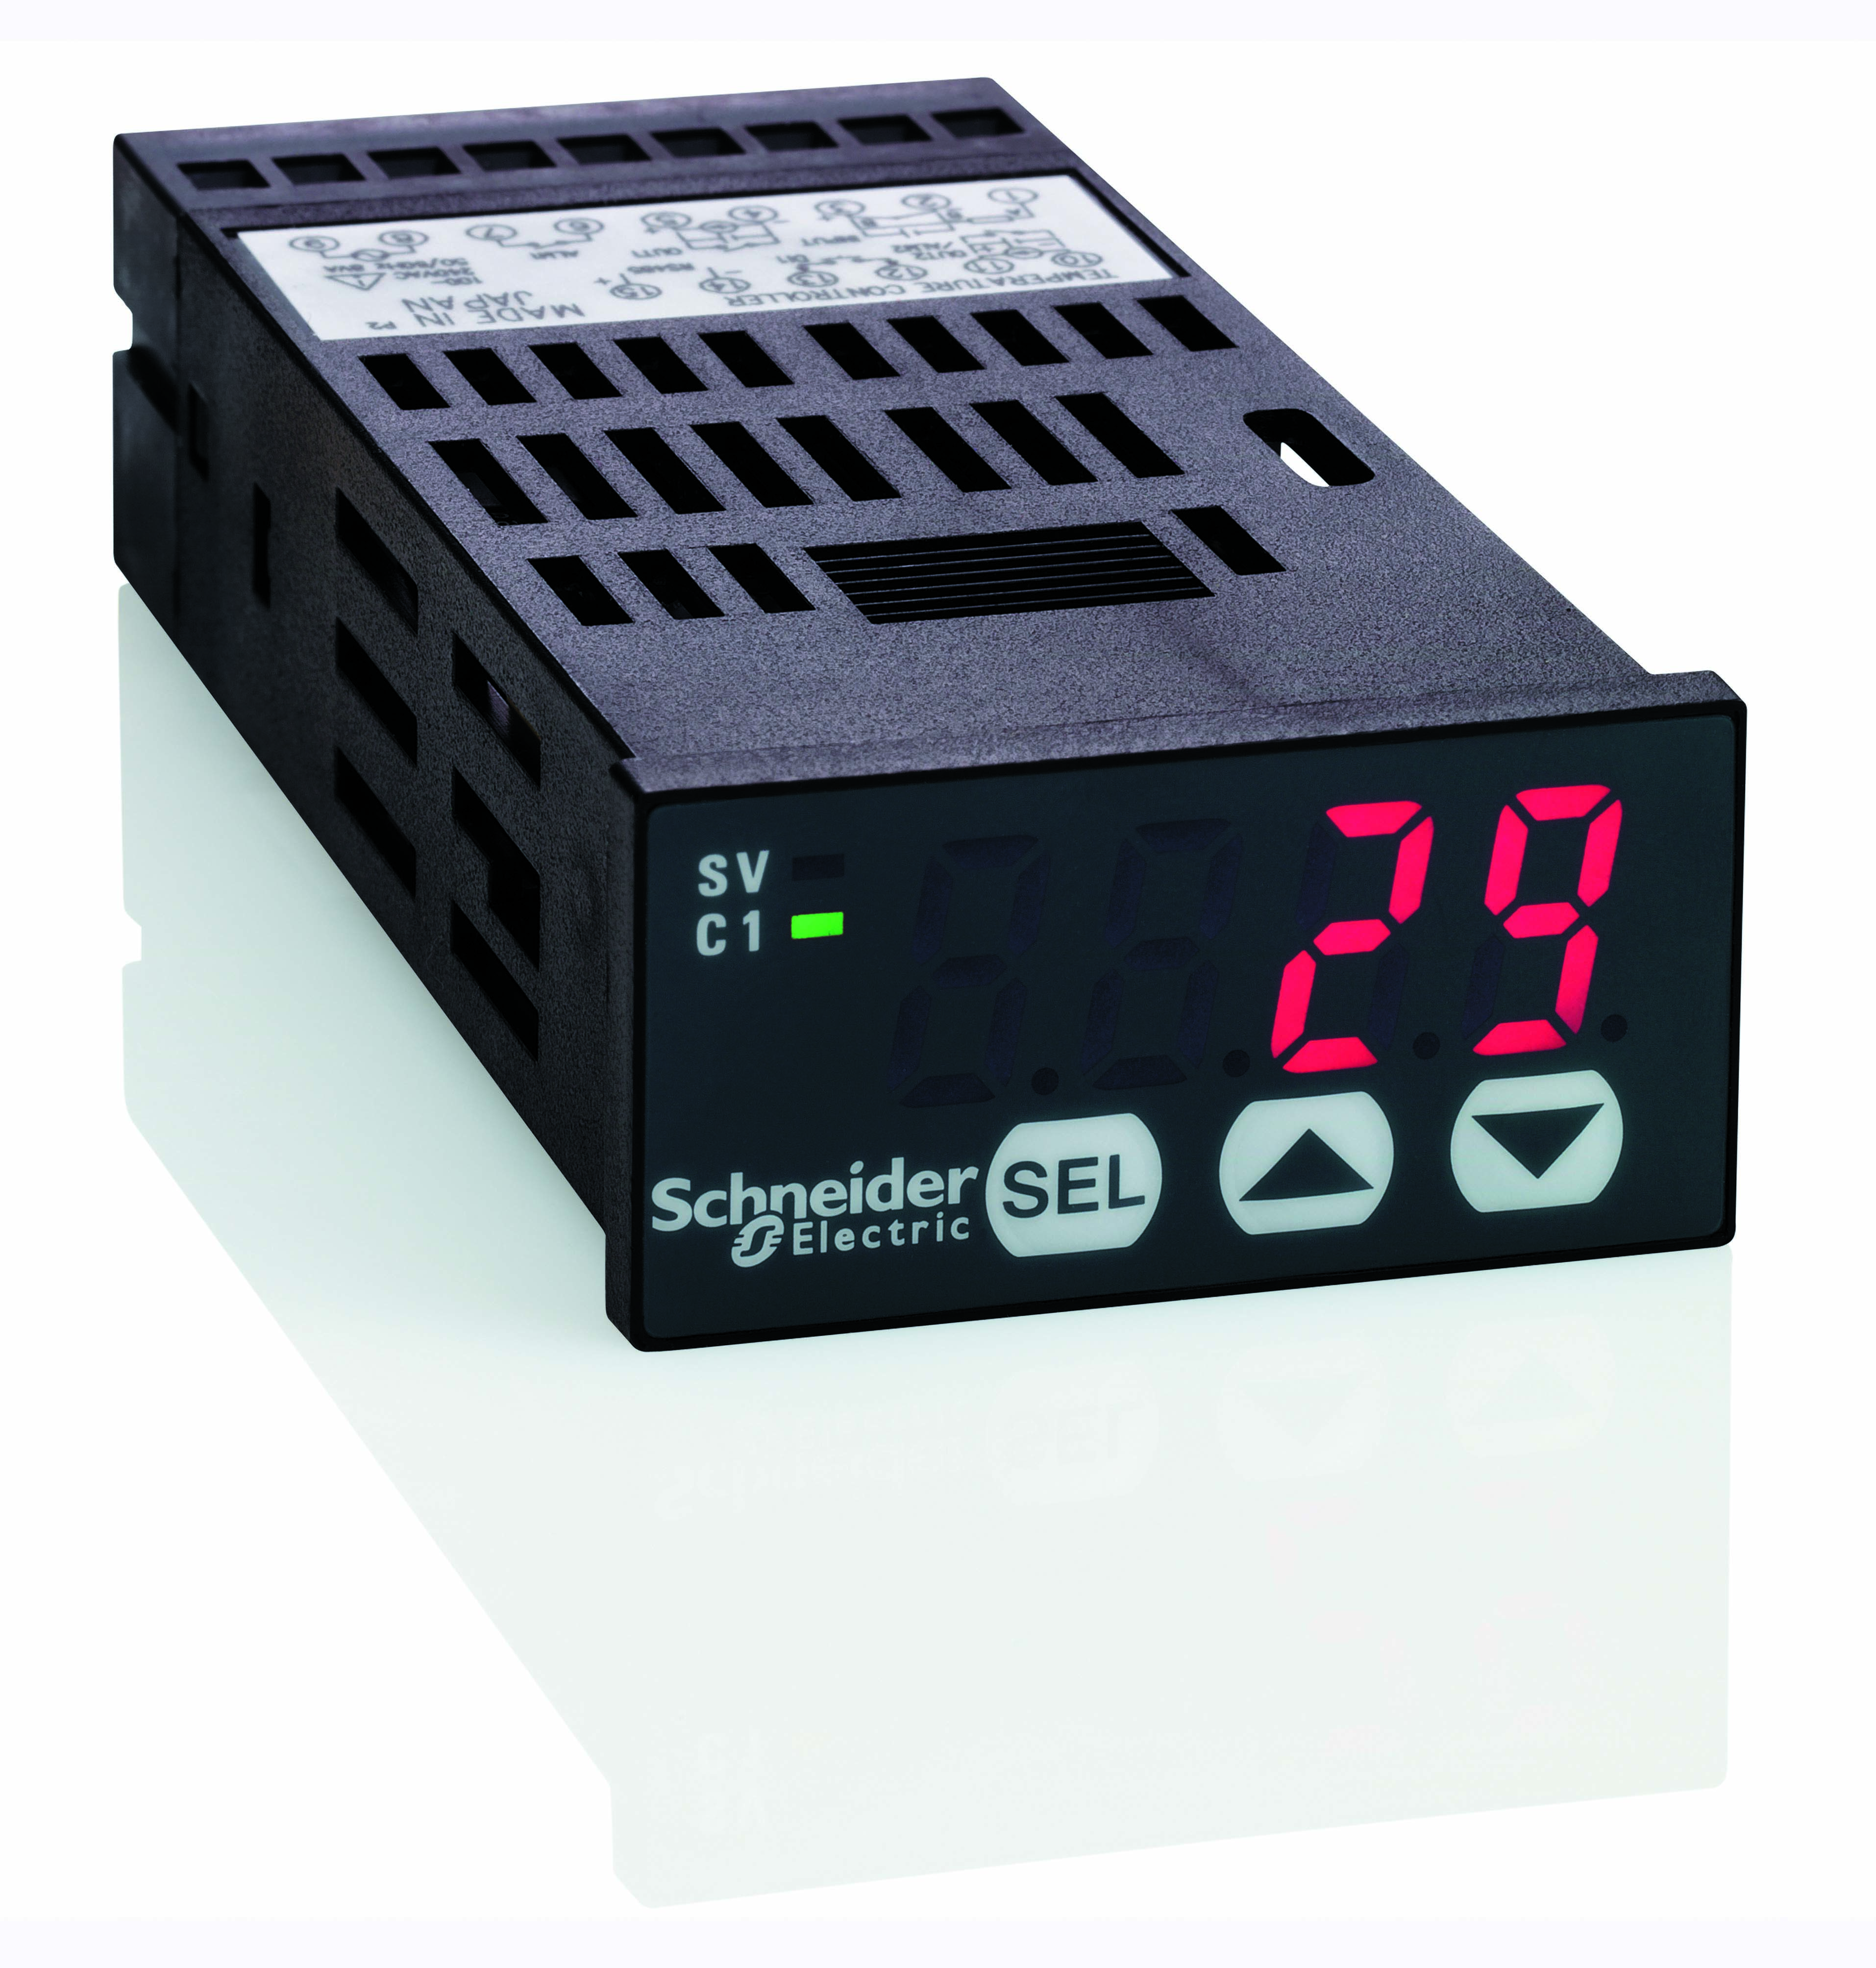 24 reg. Реле контроля тока Шнайдер электрик 4-20ma. ПИД регулятор температуры Schneider. ПИД-регулятор для Schneider Electric m340. Контроллер TDM парогенераторов 24 240v.